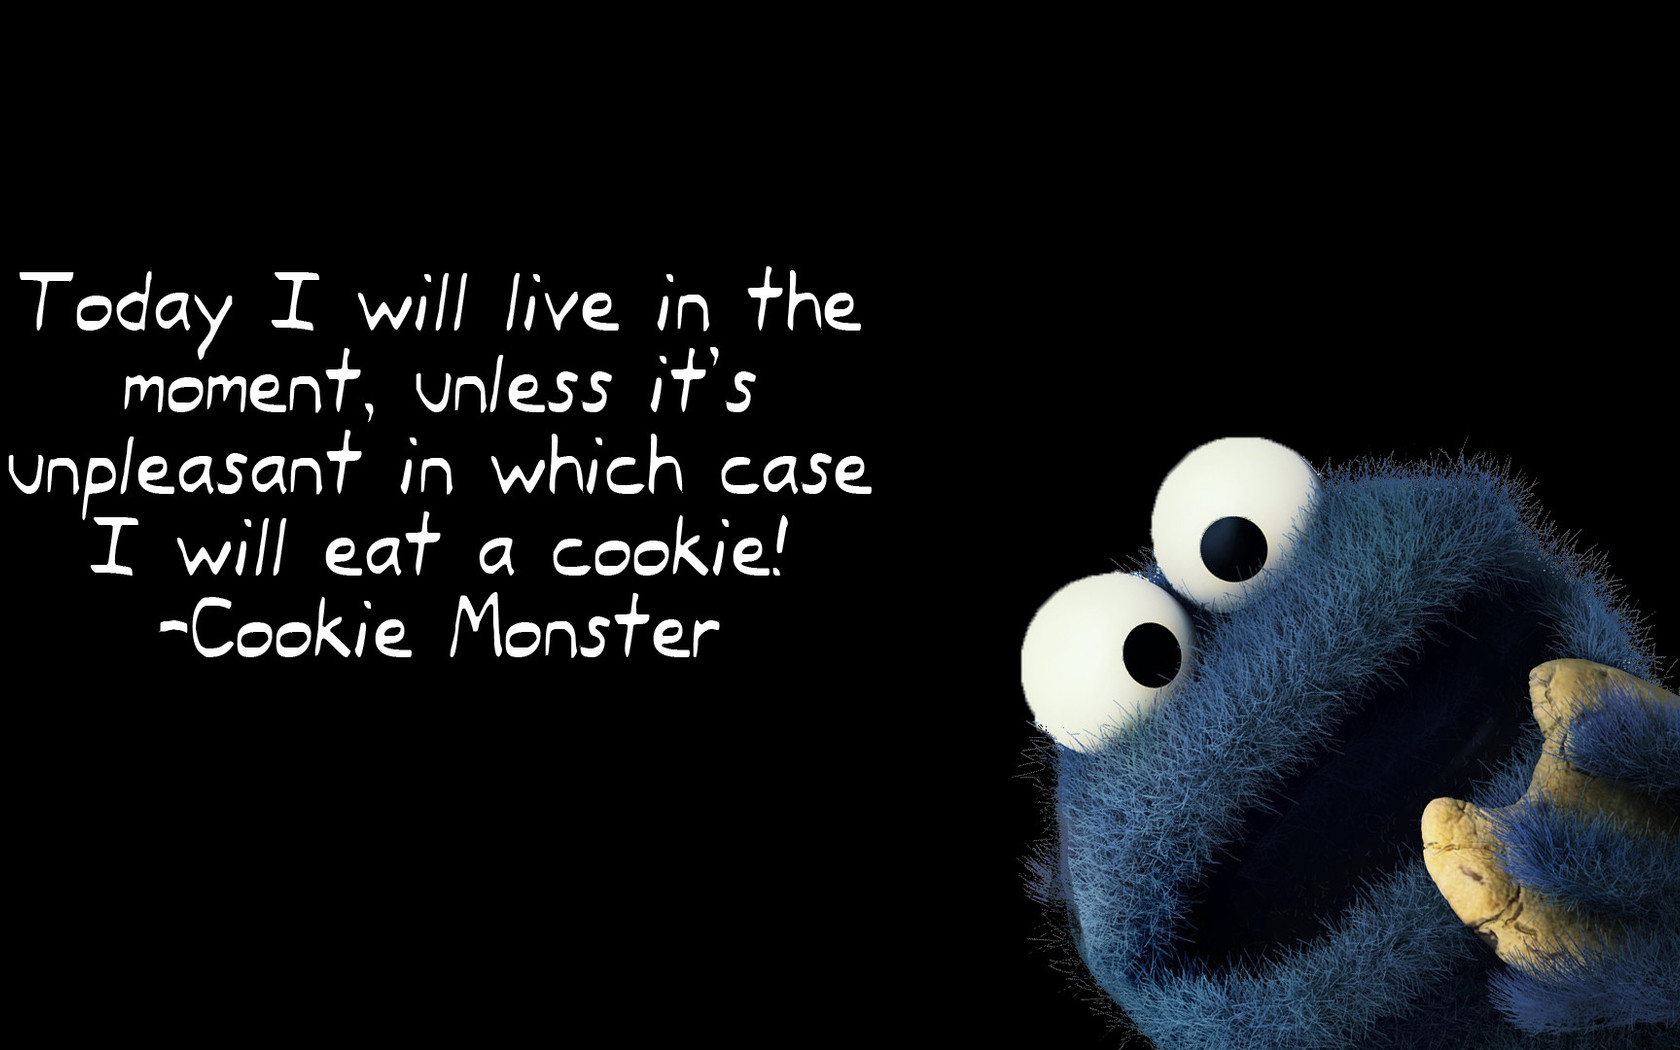 Cookie Monster quote wallpaper 17803 1680x1050